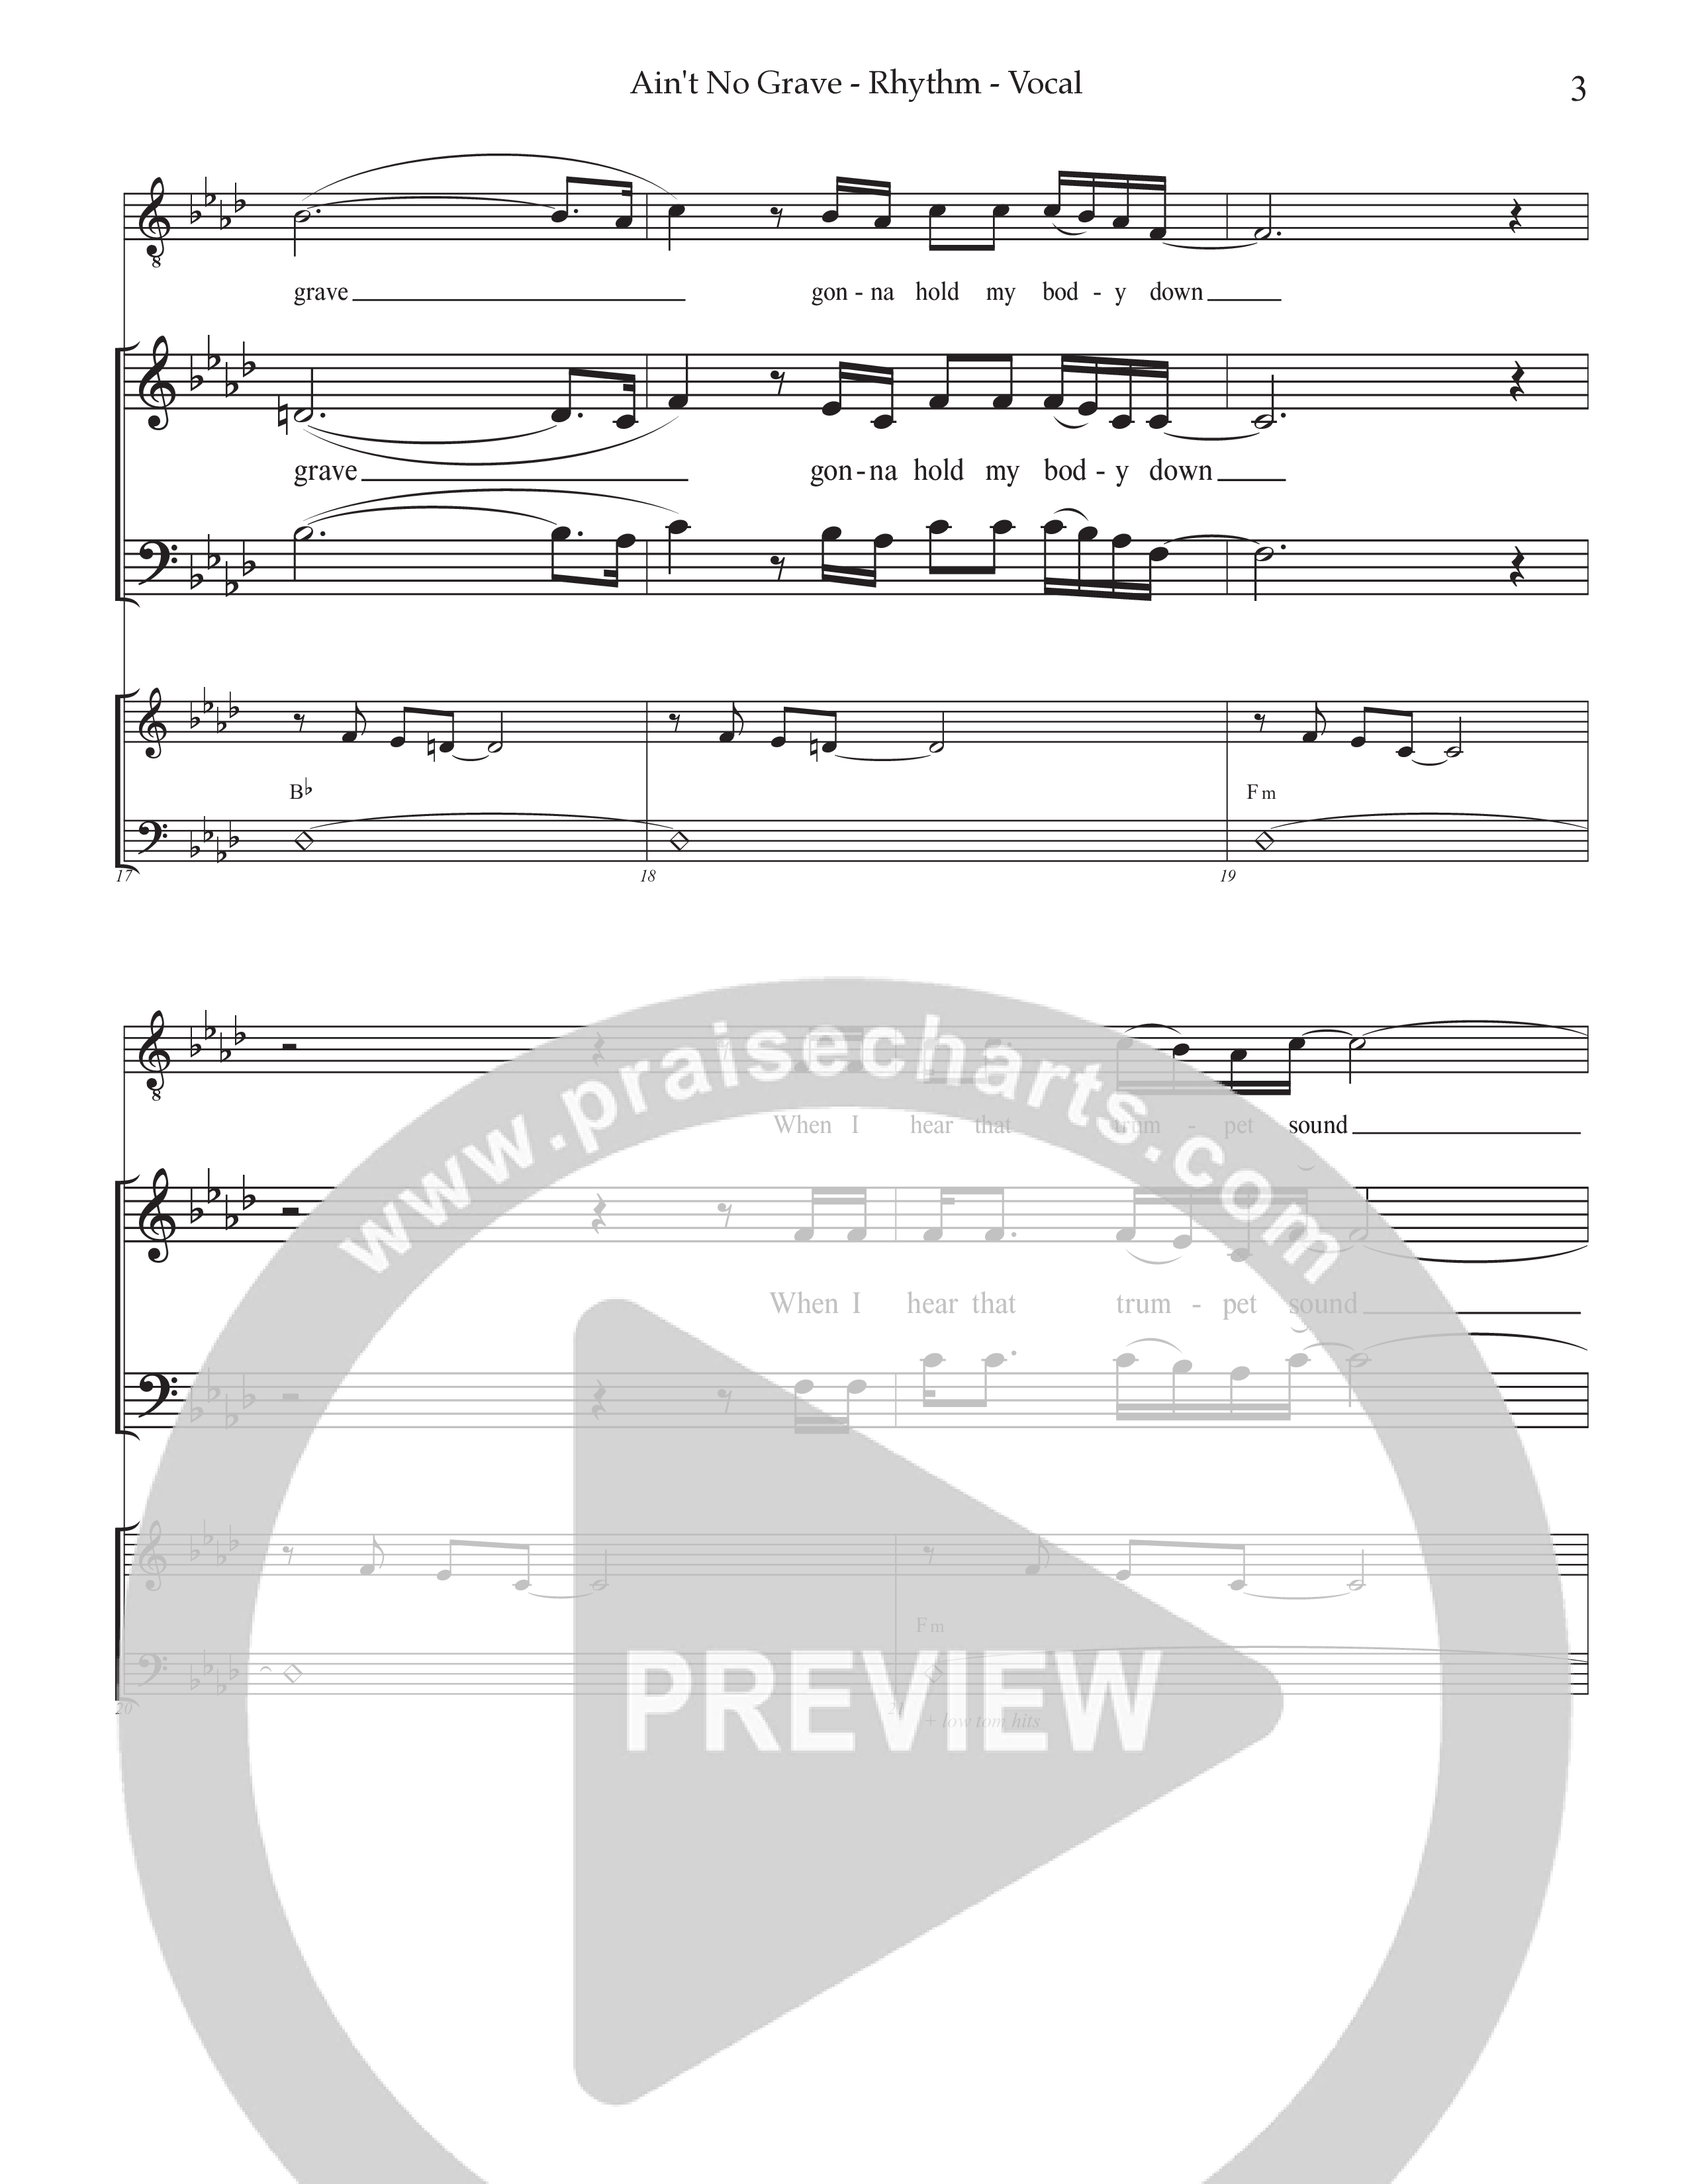 Ain't No Grave (Choral Anthem SATB) Rhythm/Vocal (Prestonwood Choir / Prestonwood Worship / Arr. Jonathan Walker)